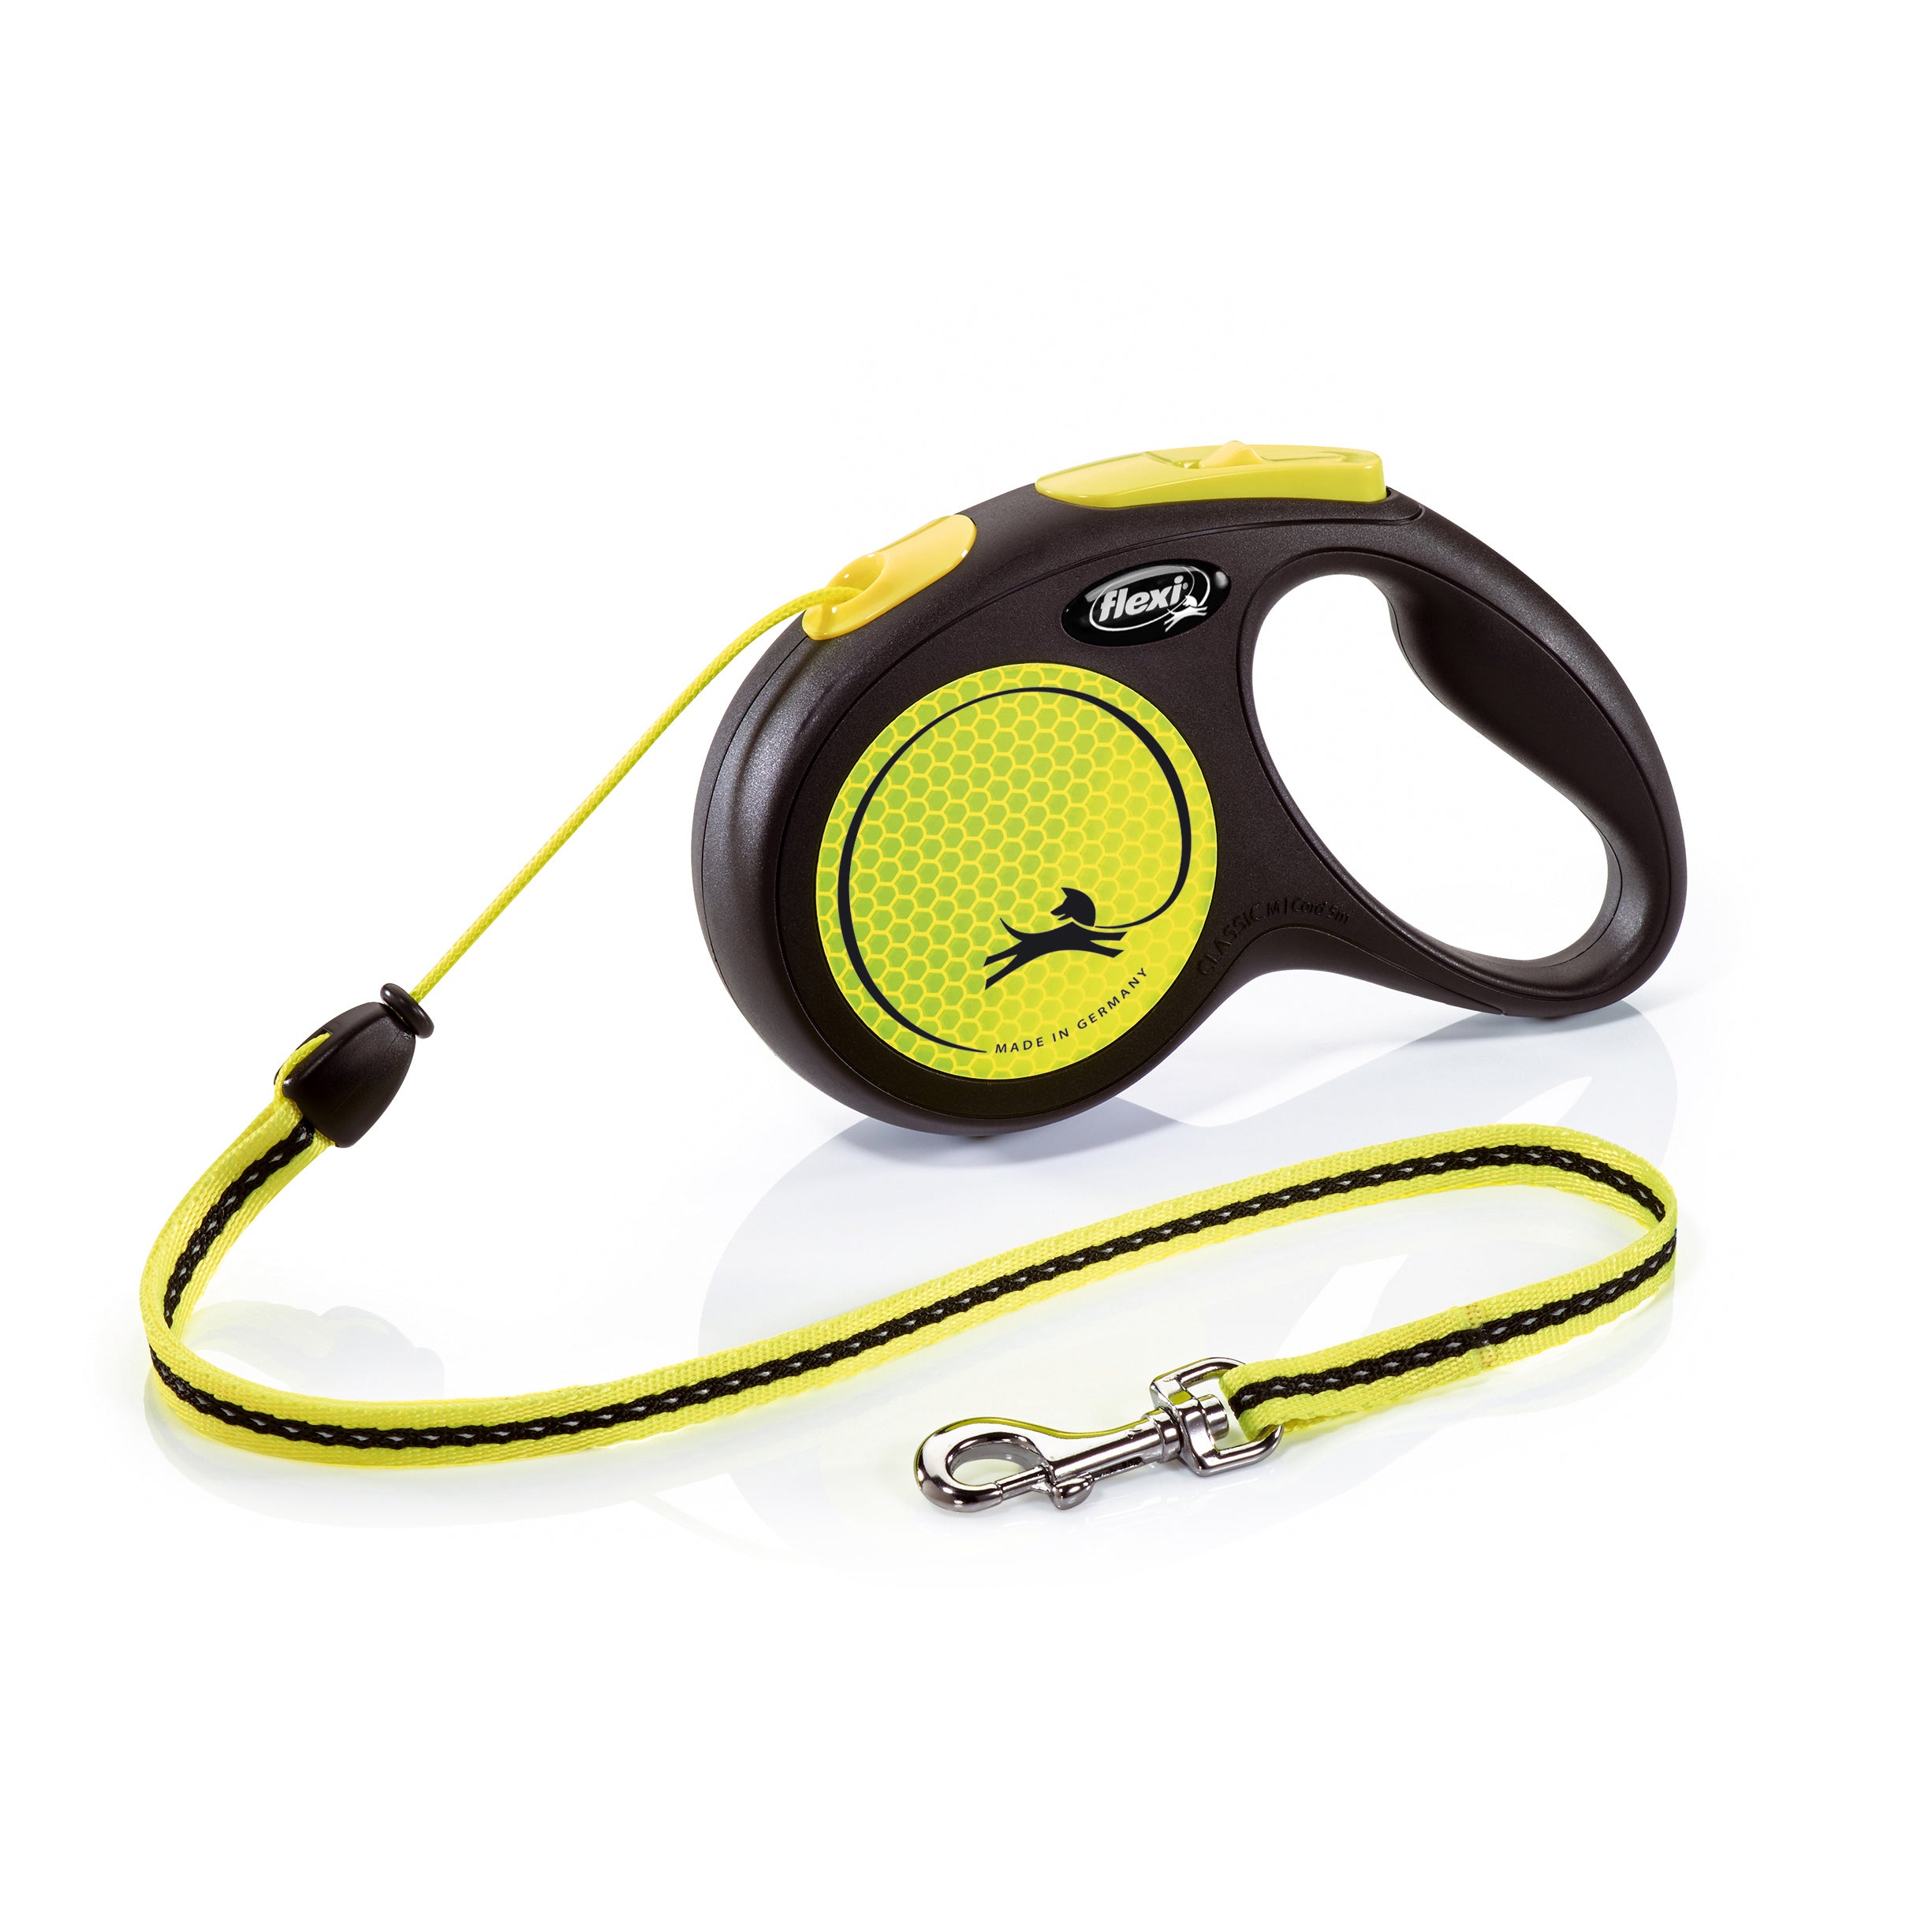 Image of Flexi Neon Retractable Dog Lead - Black/Yellow - Medium Cord